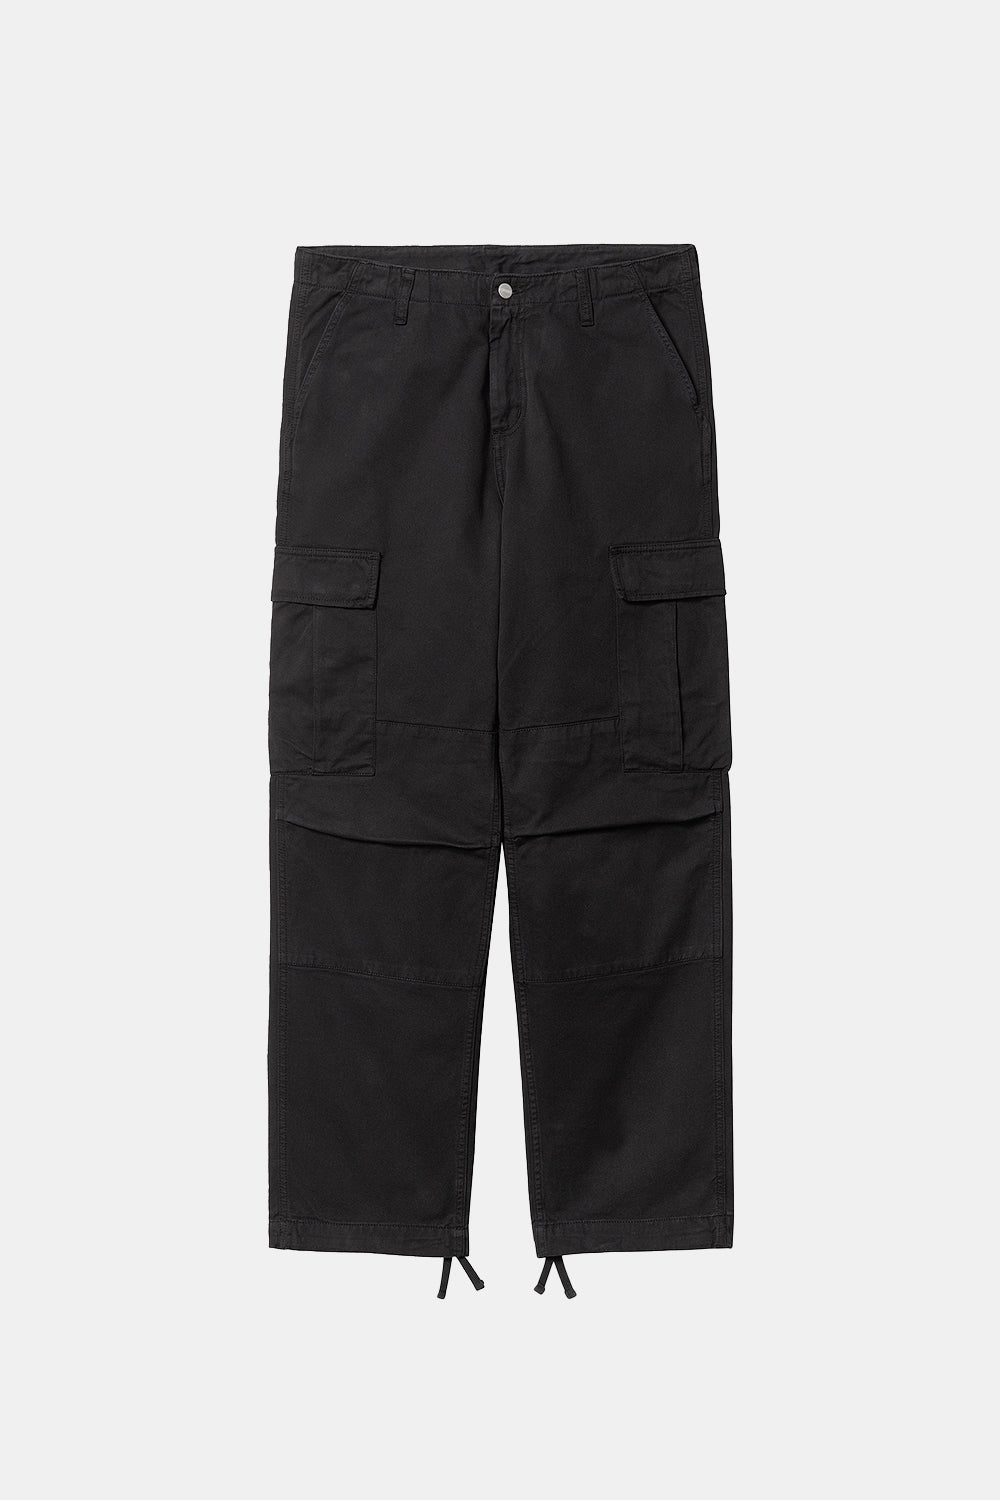 Carhartt WIP Garment Dyed Cargo Pant (Black)